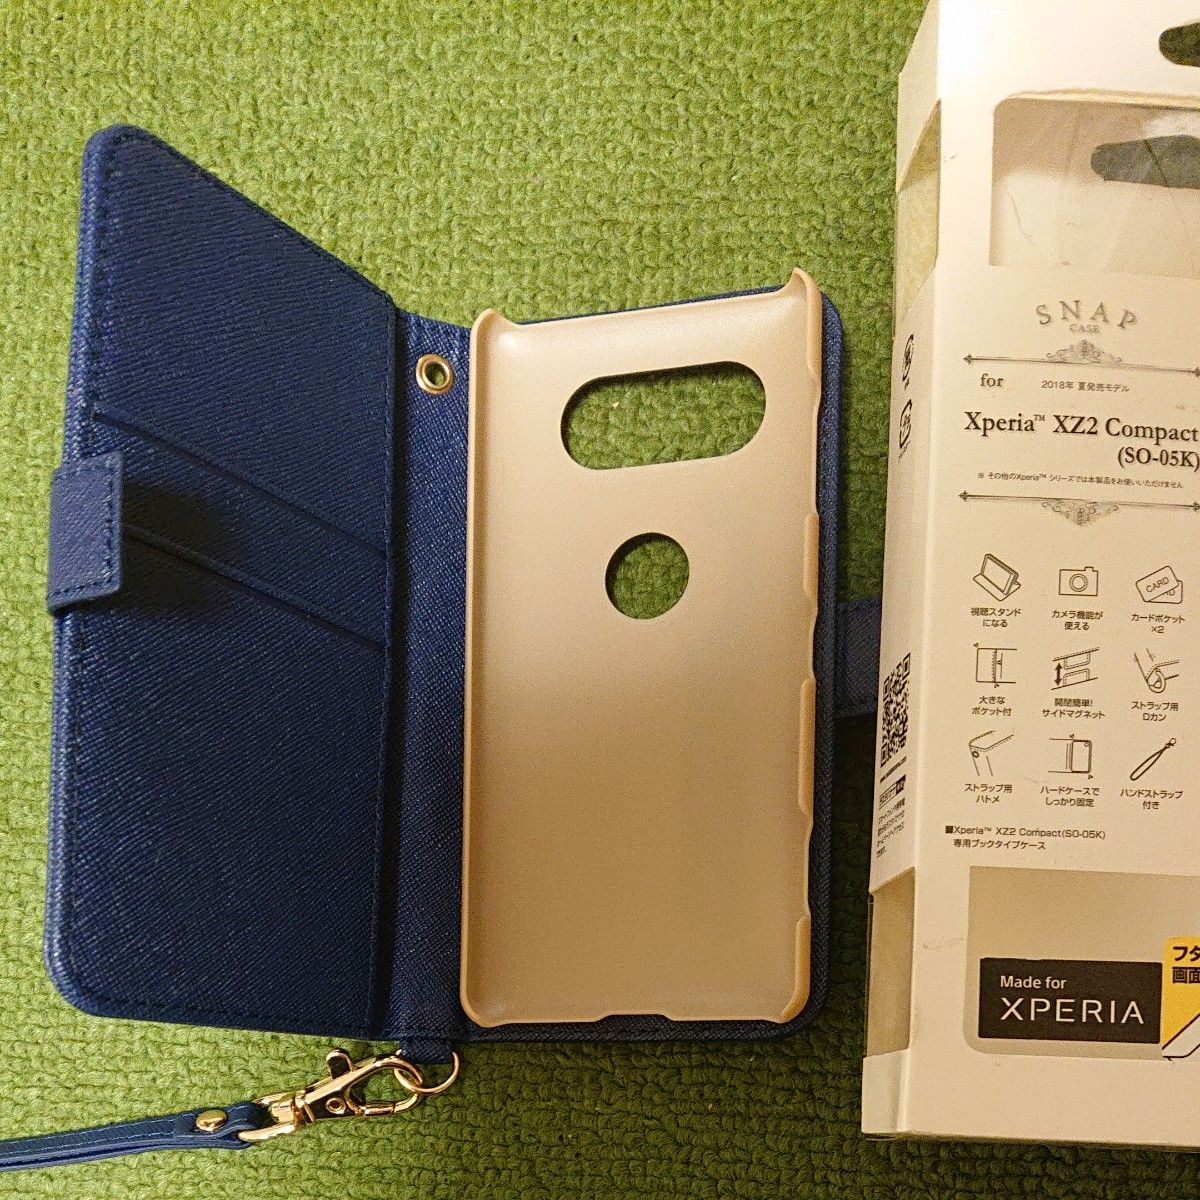 Xperia XZ2 Compact(SO-05K) ラスタバナナ 手帳型スマホケース ネイビー 新品